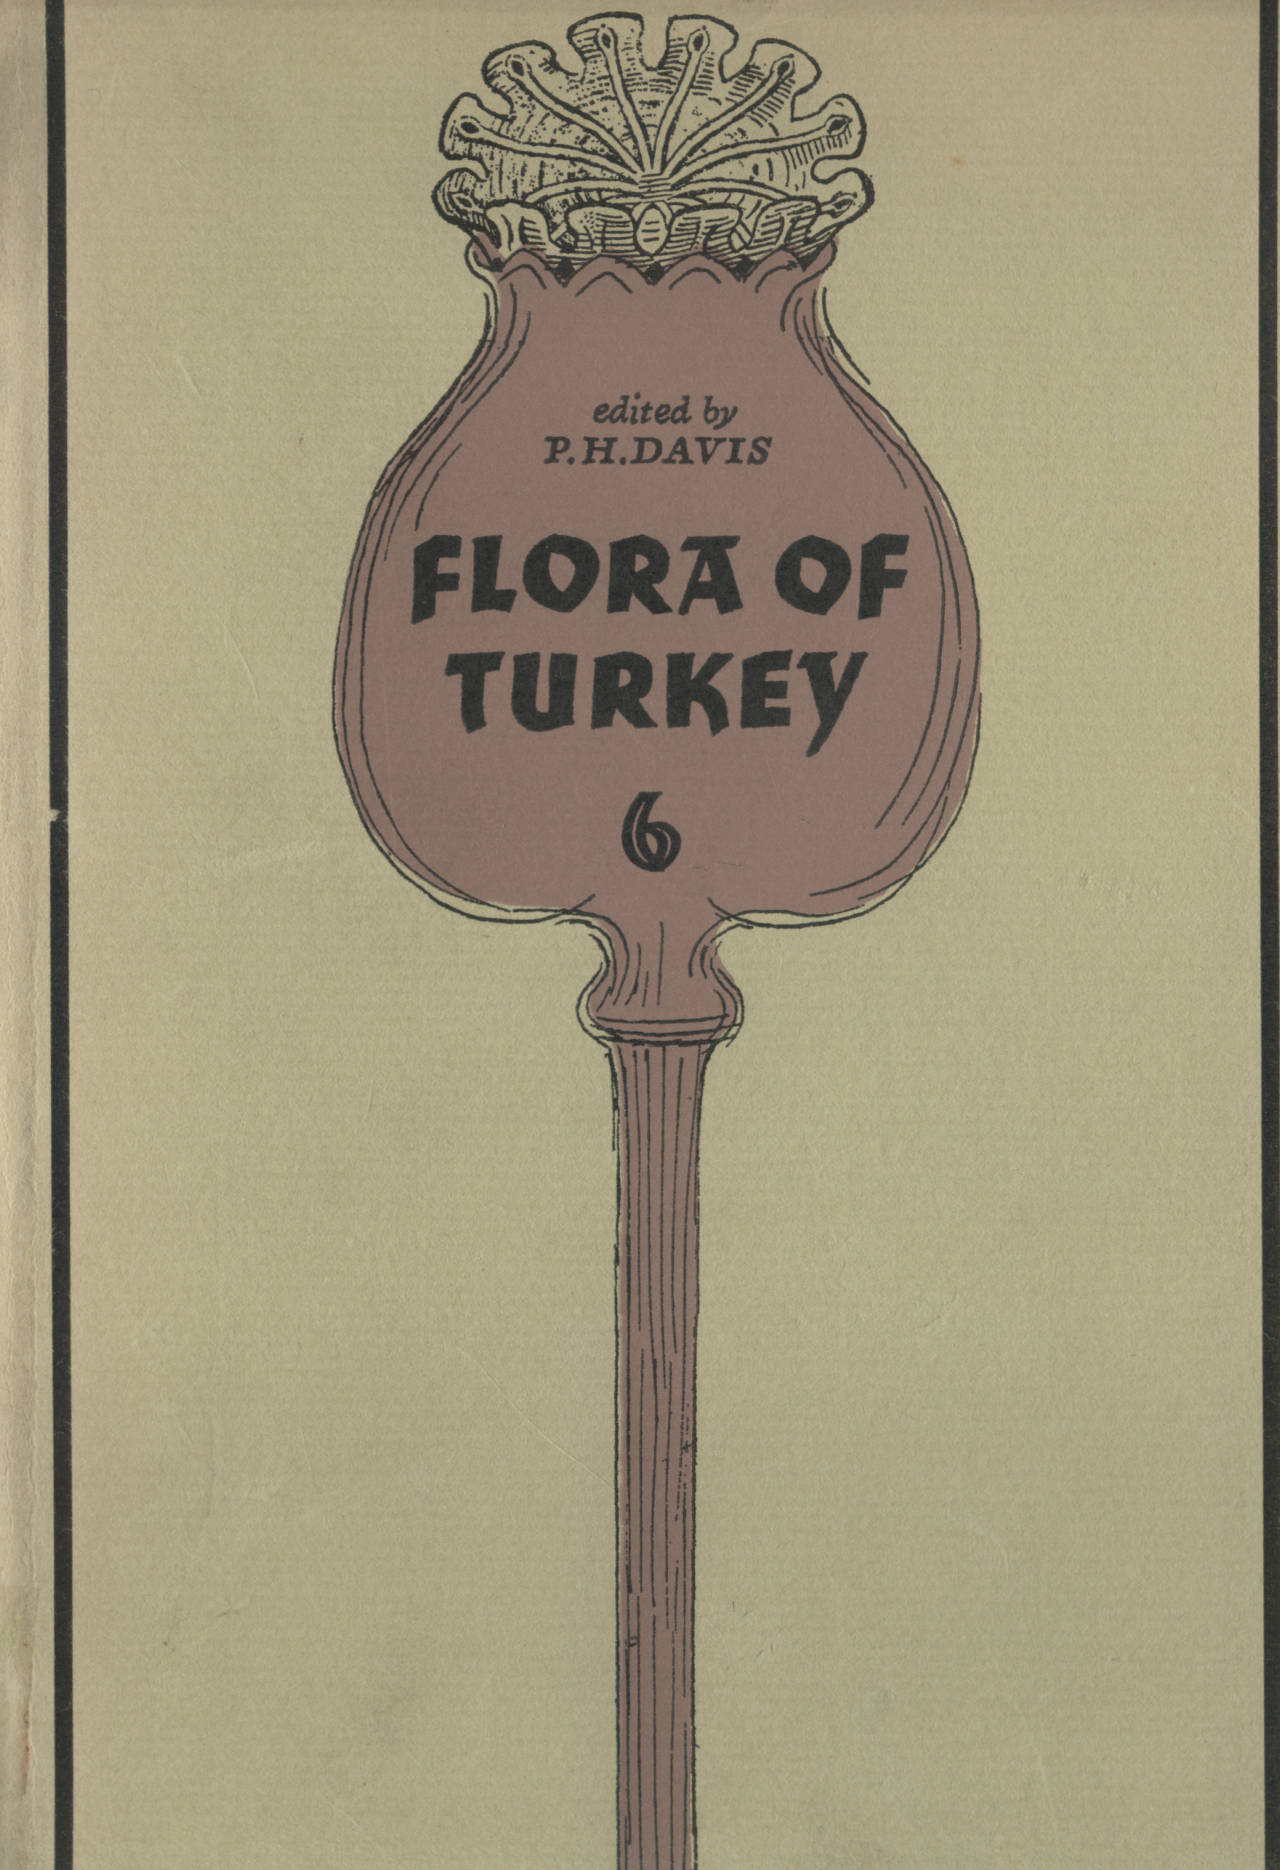 FLORA OF TURKEY 6